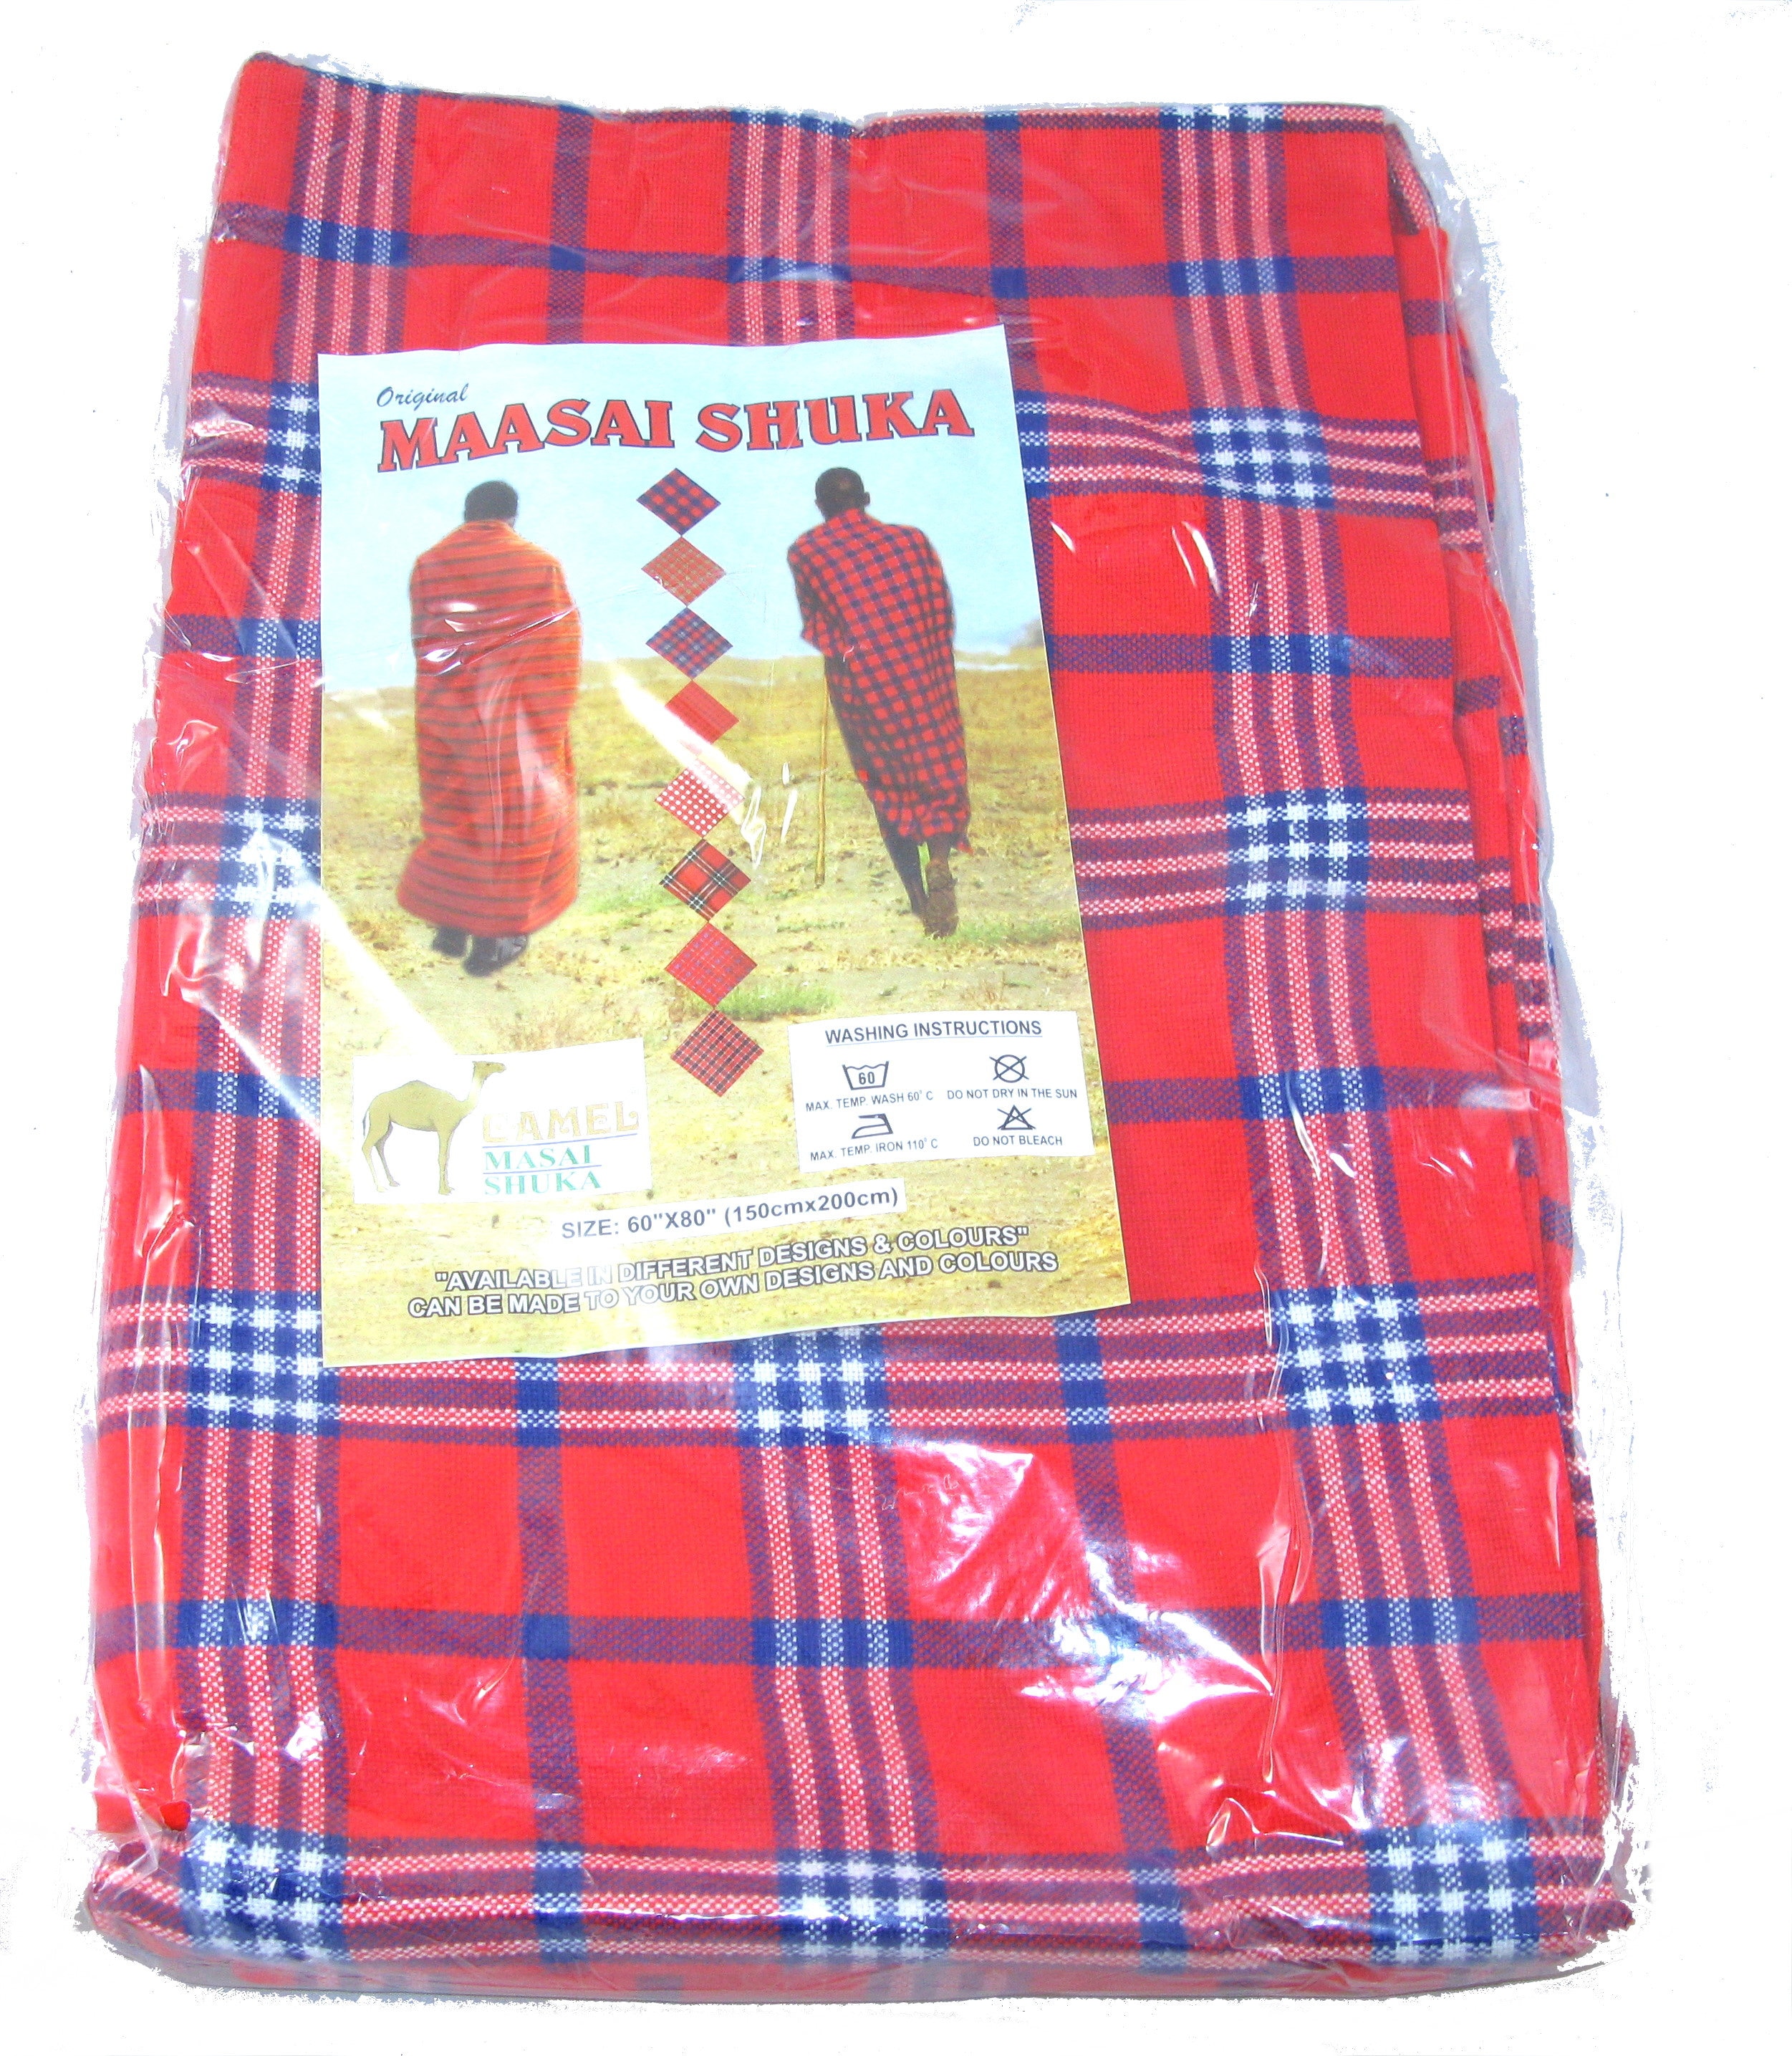 Shuka sheets or Shuka blankets, are wrapped around the body. Shukas